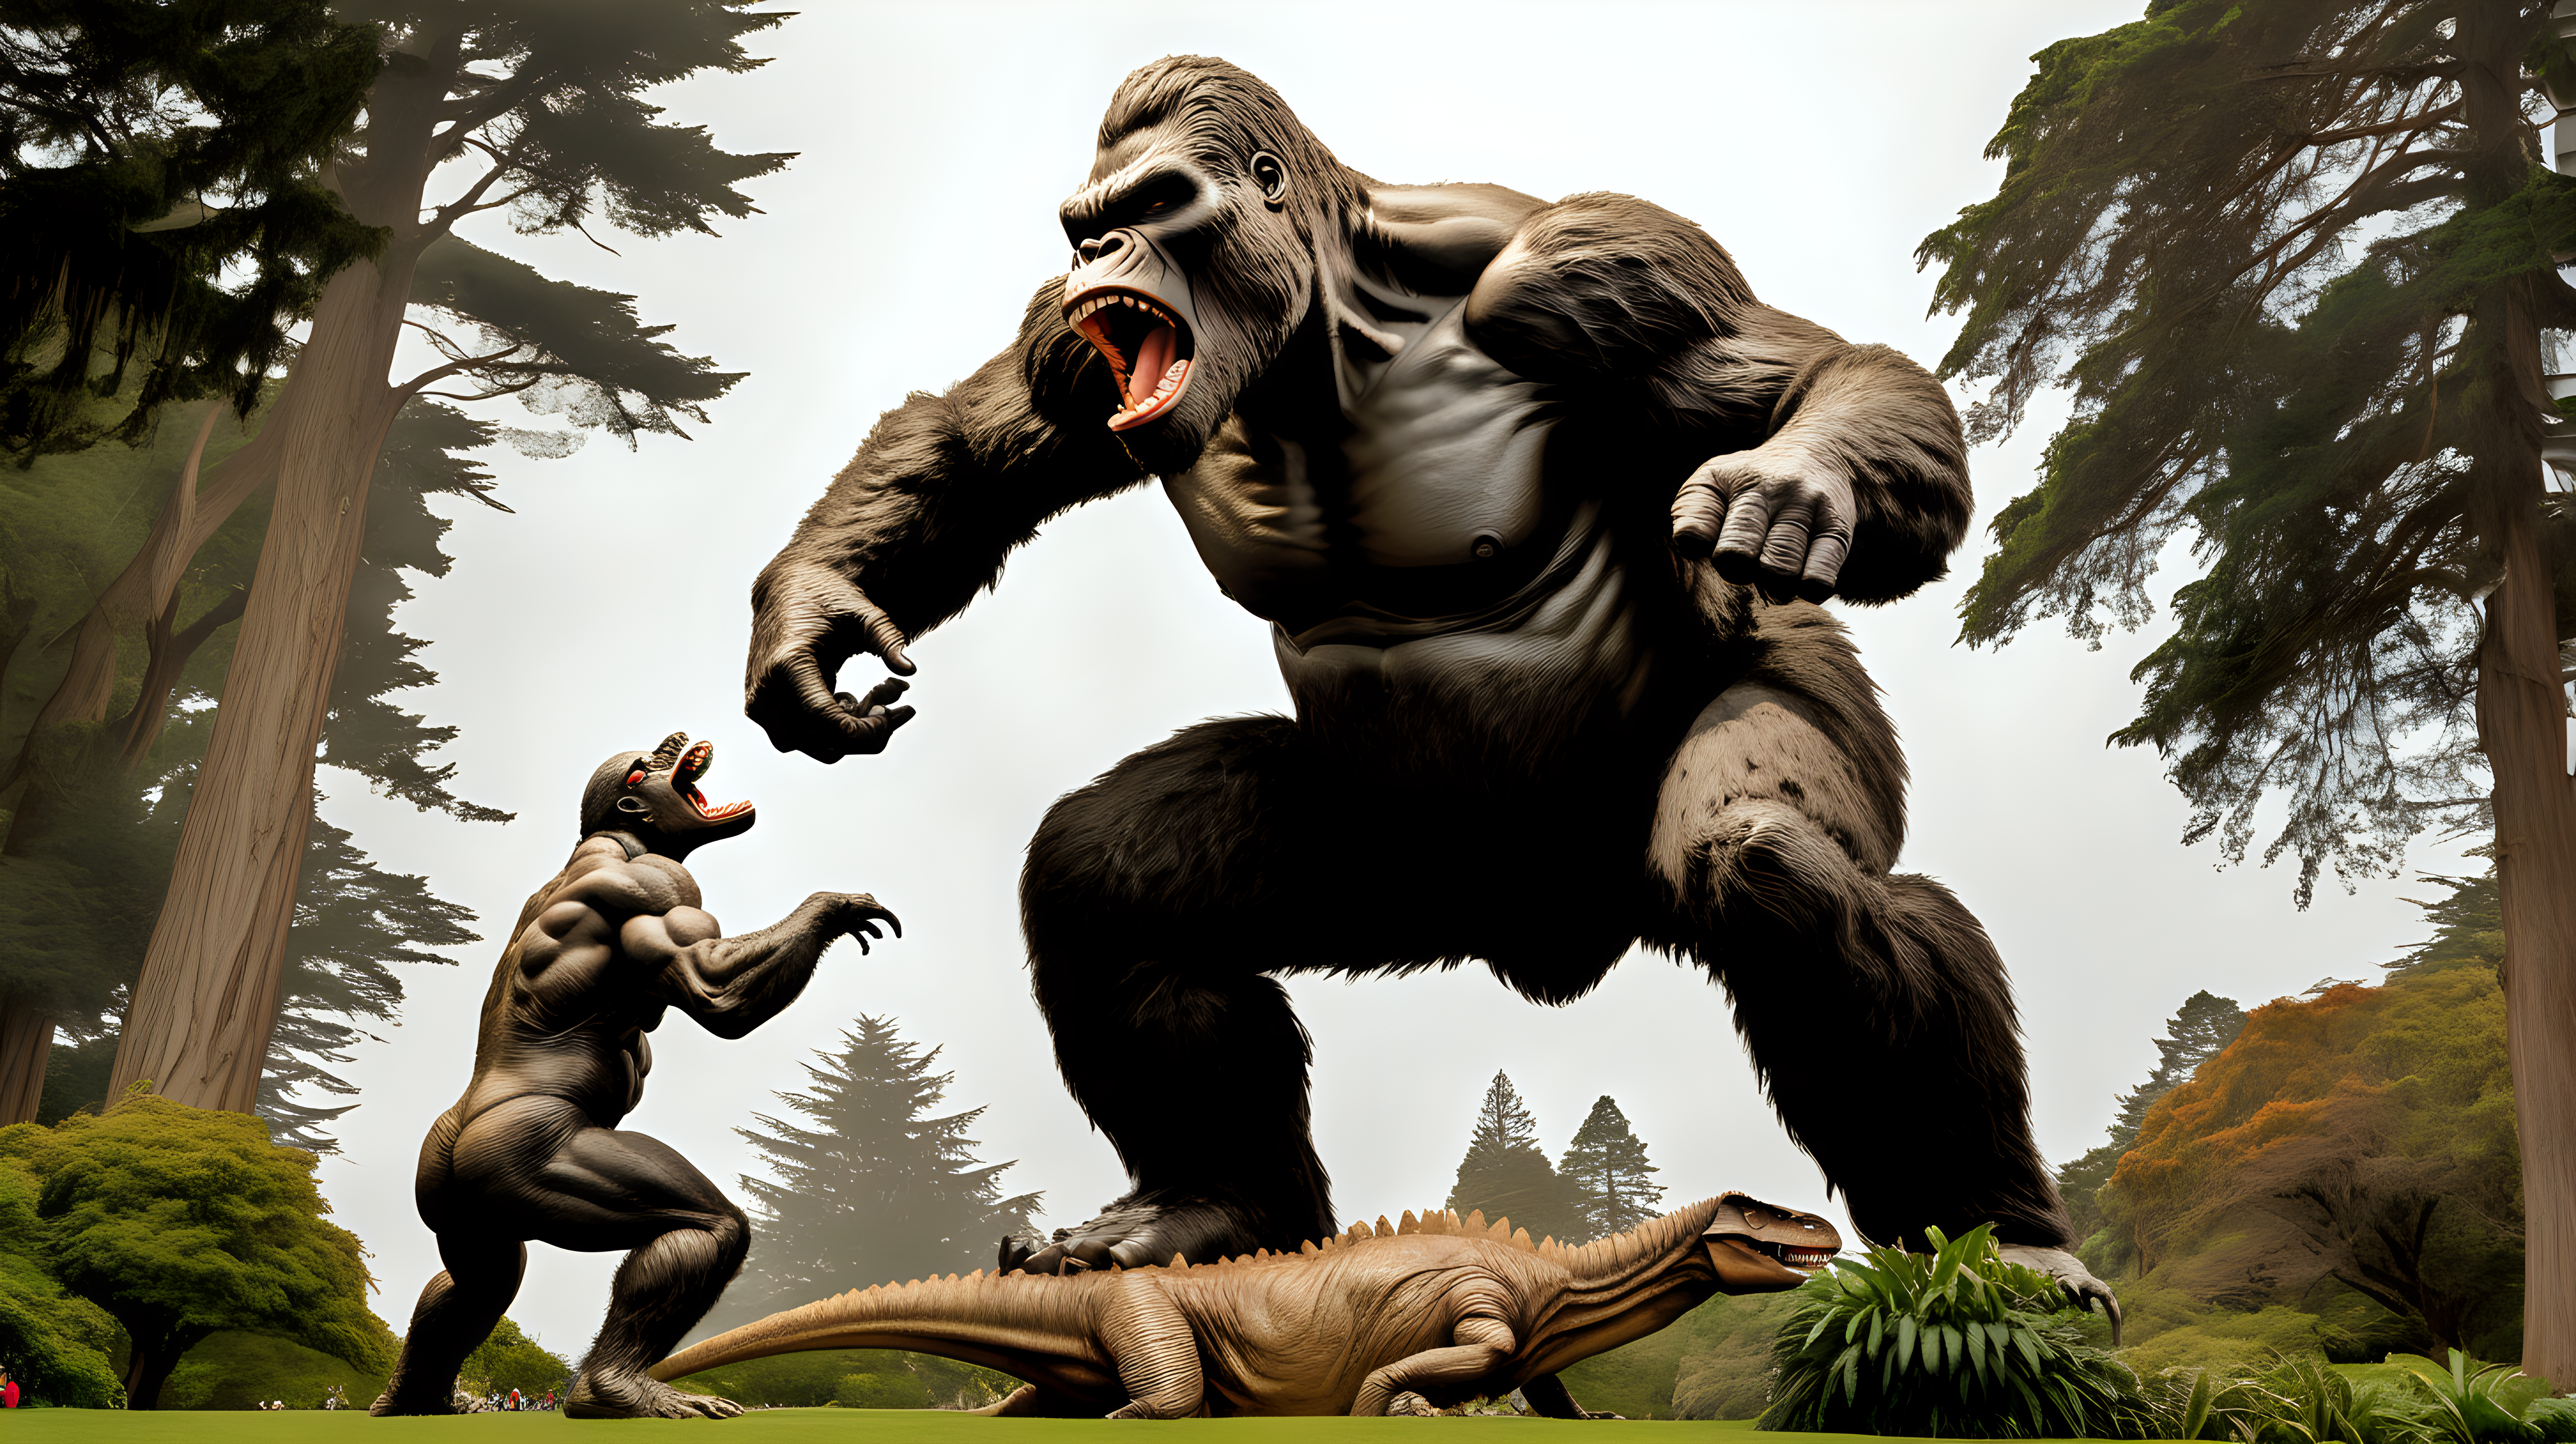 King Kong fighting a Tyrannosaurus Rex in Golden Gate Park